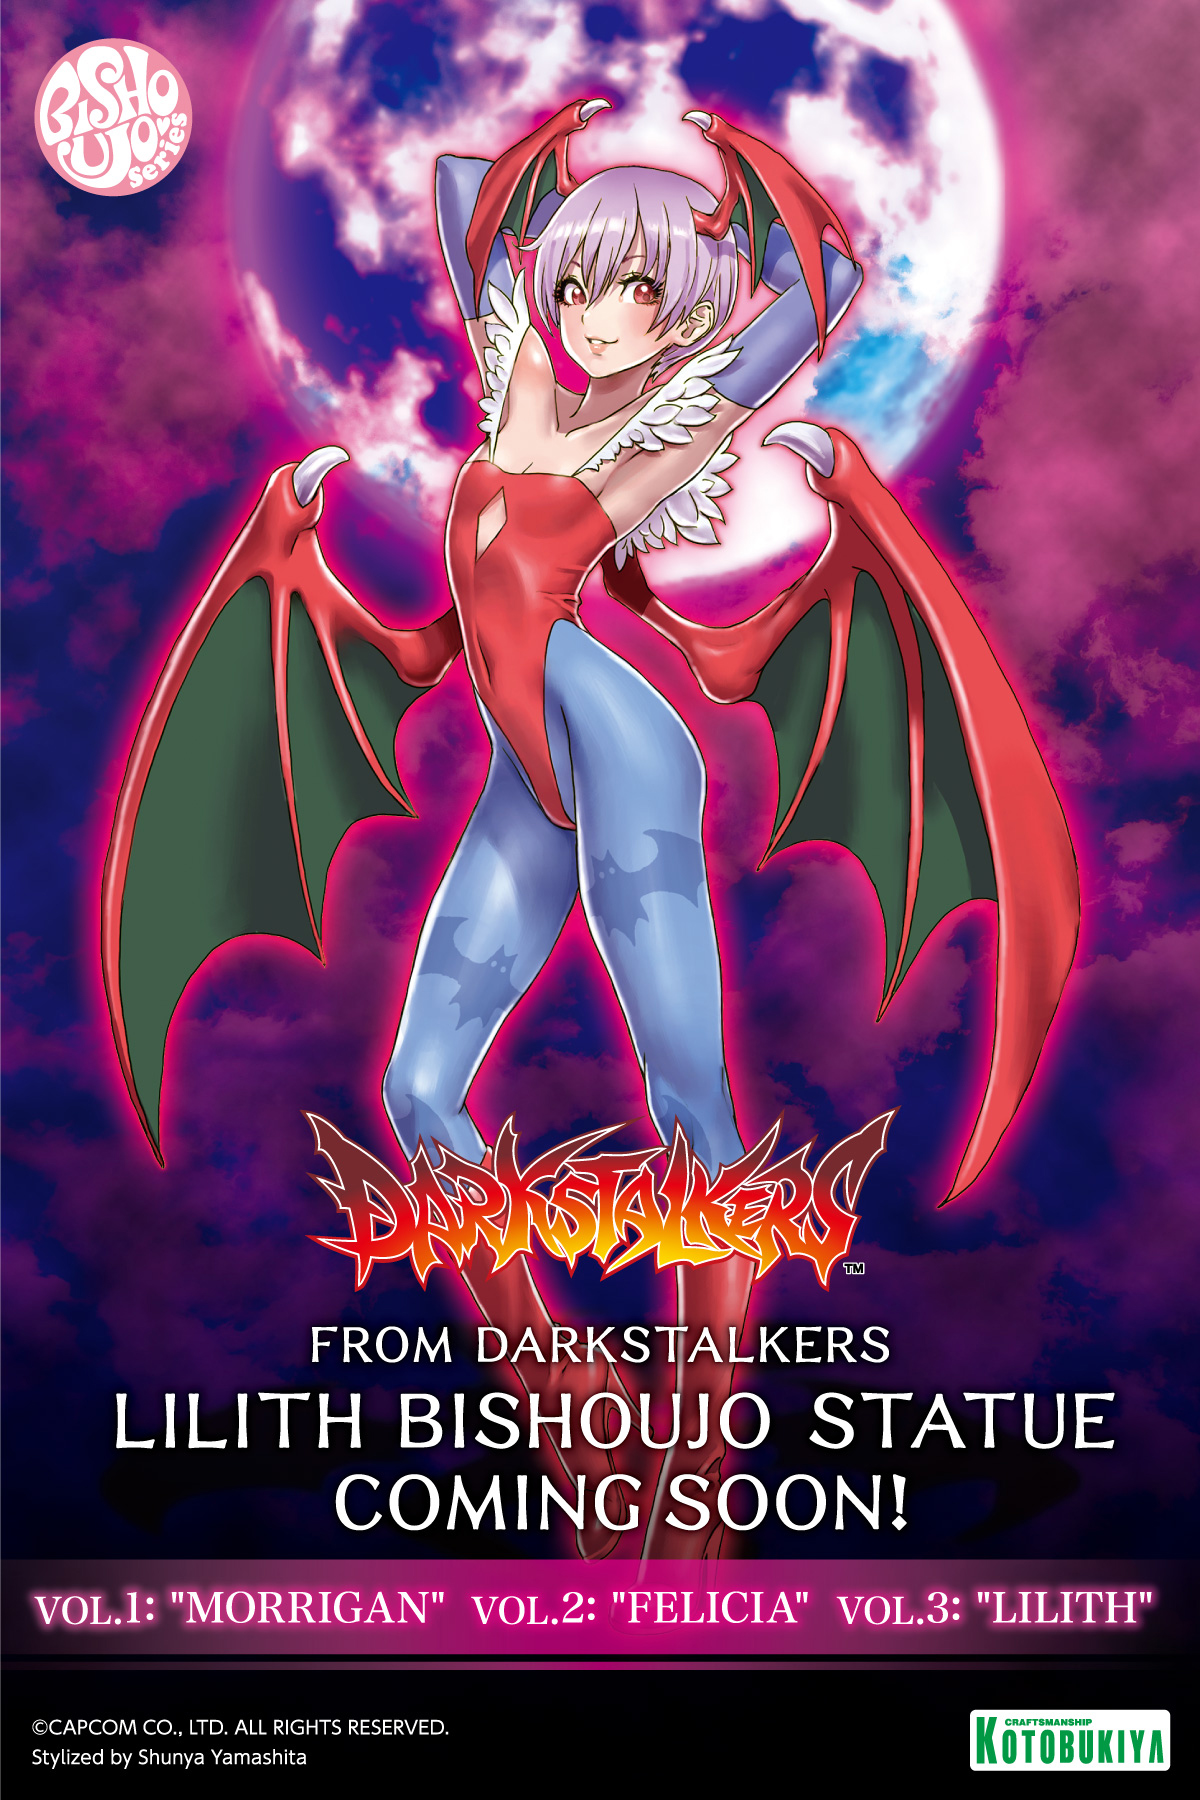 Next Kotobukiya Bishoujo Darkstalkers Statue is Lilith